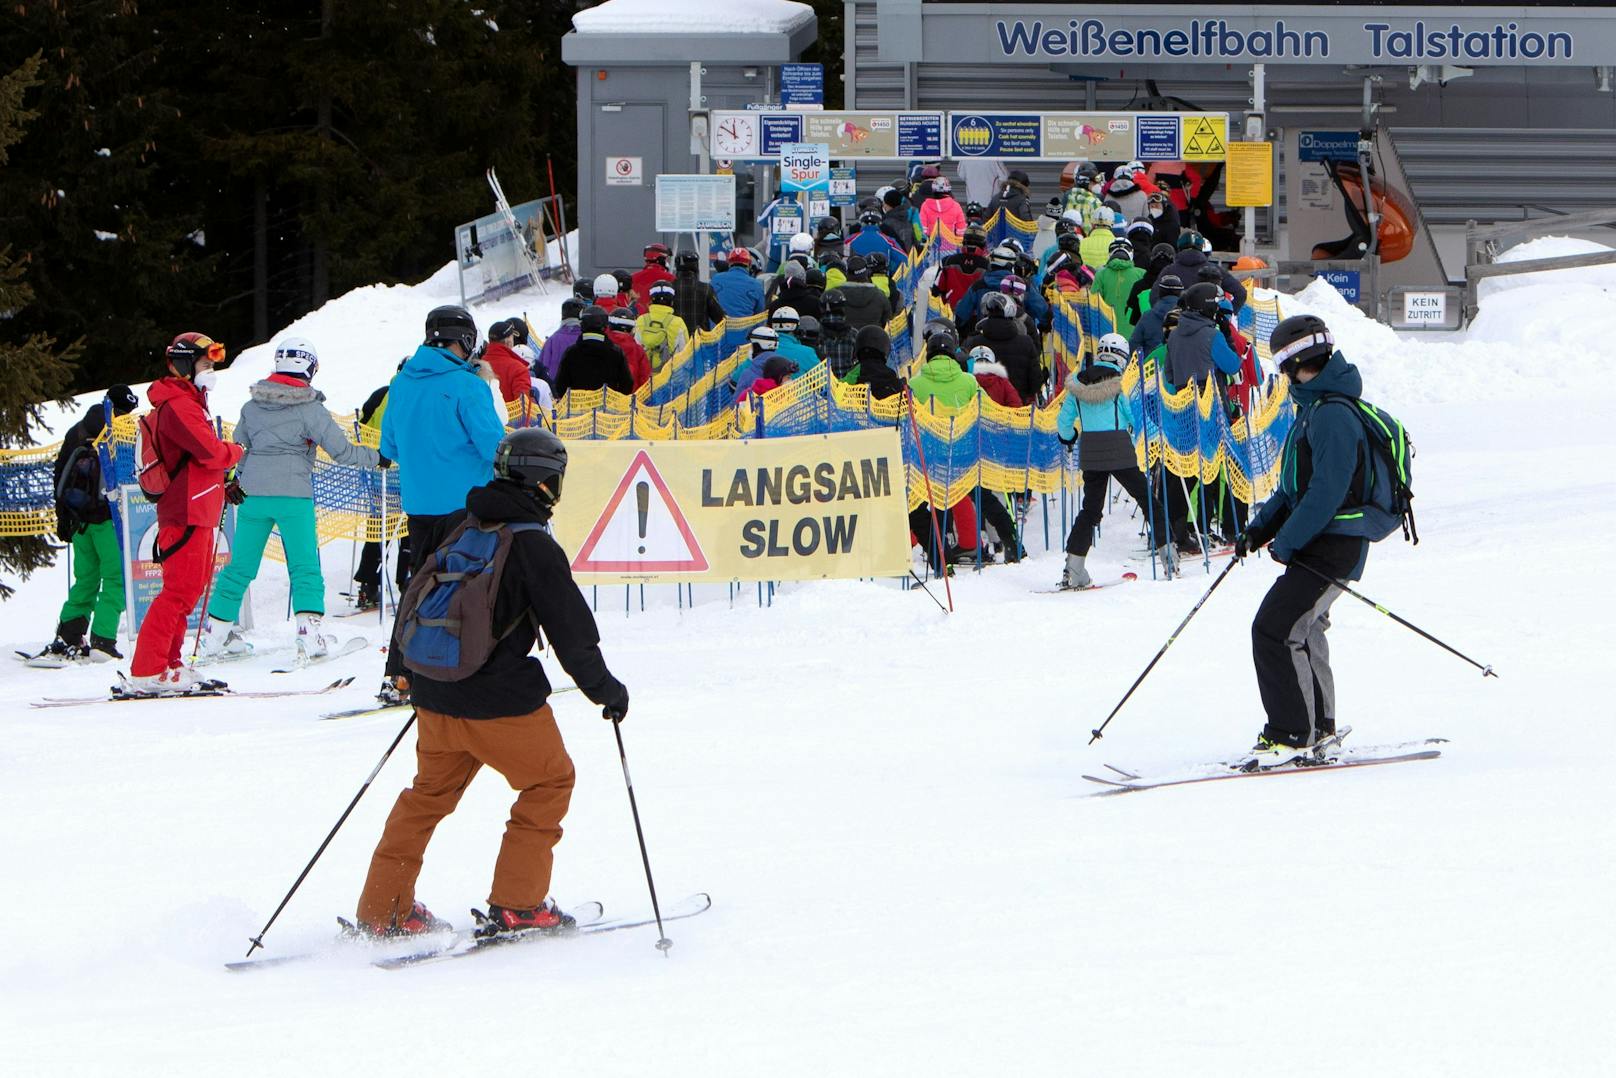 Ski-Andrang in Stuhleck in Spital am Semmering. Die Skilifte hätten zusperren müssen, sagt der Experte.